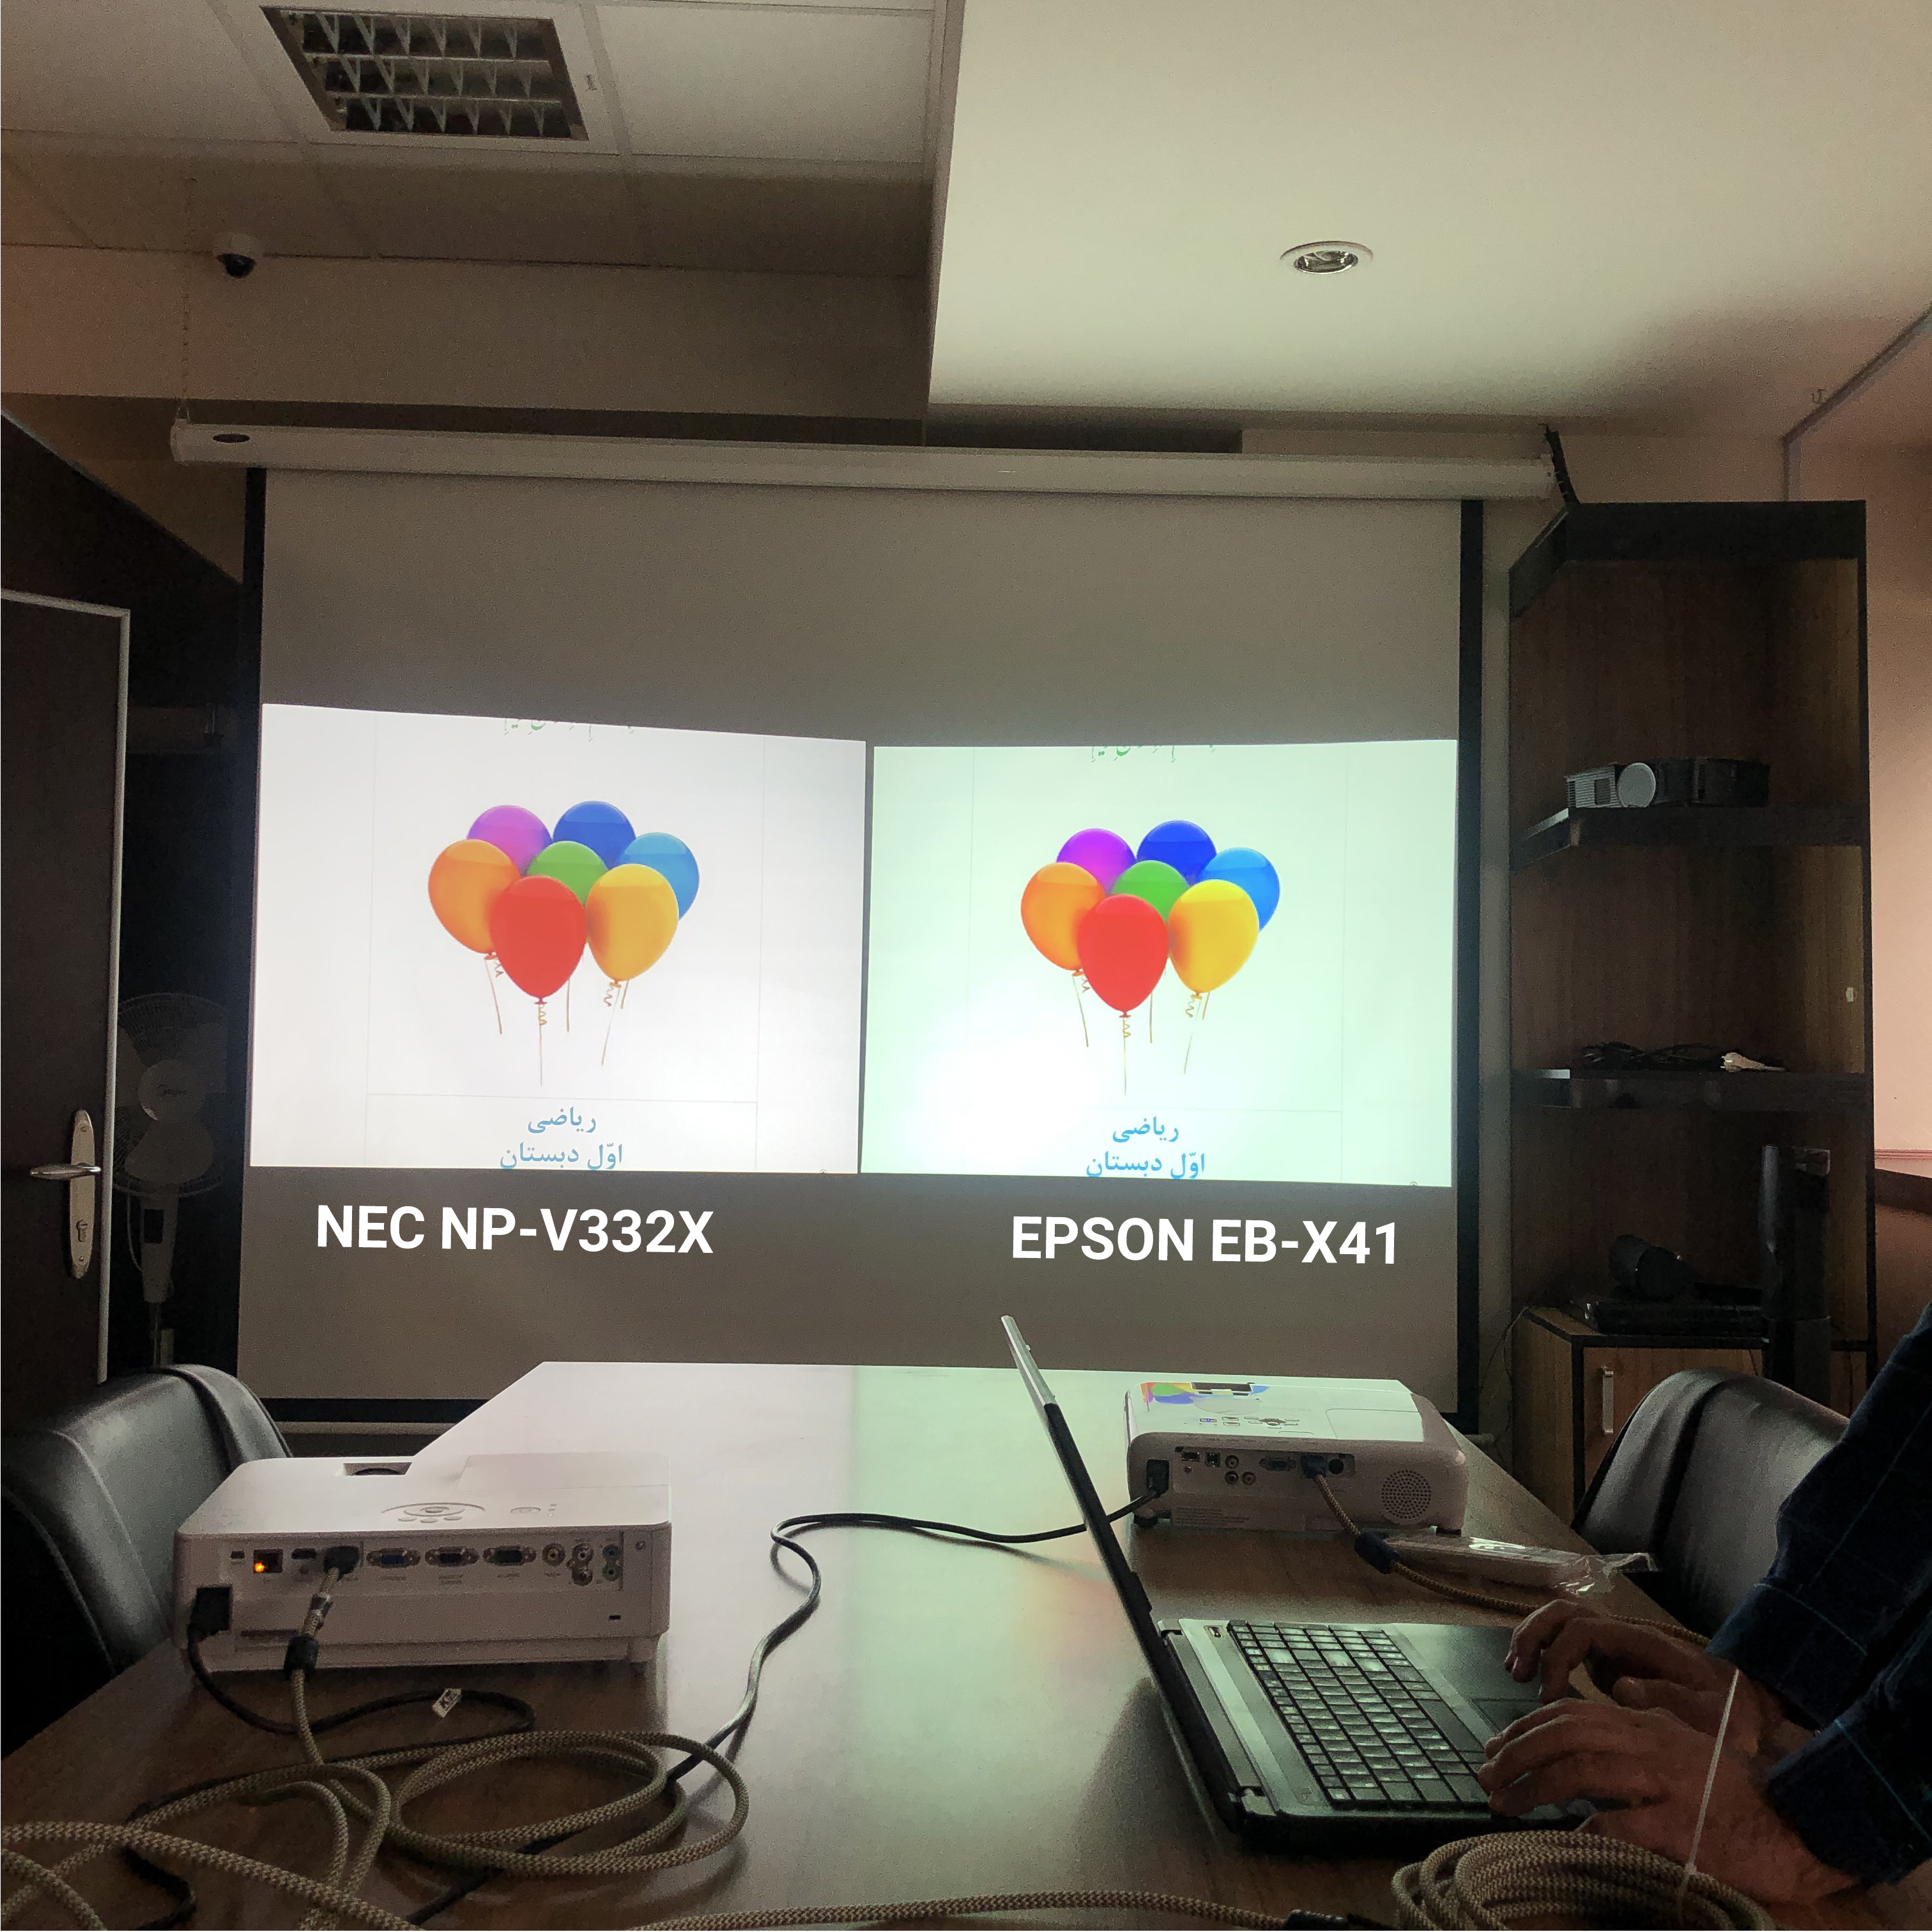 EPSON EB-X41 VS NEC NP-V332X